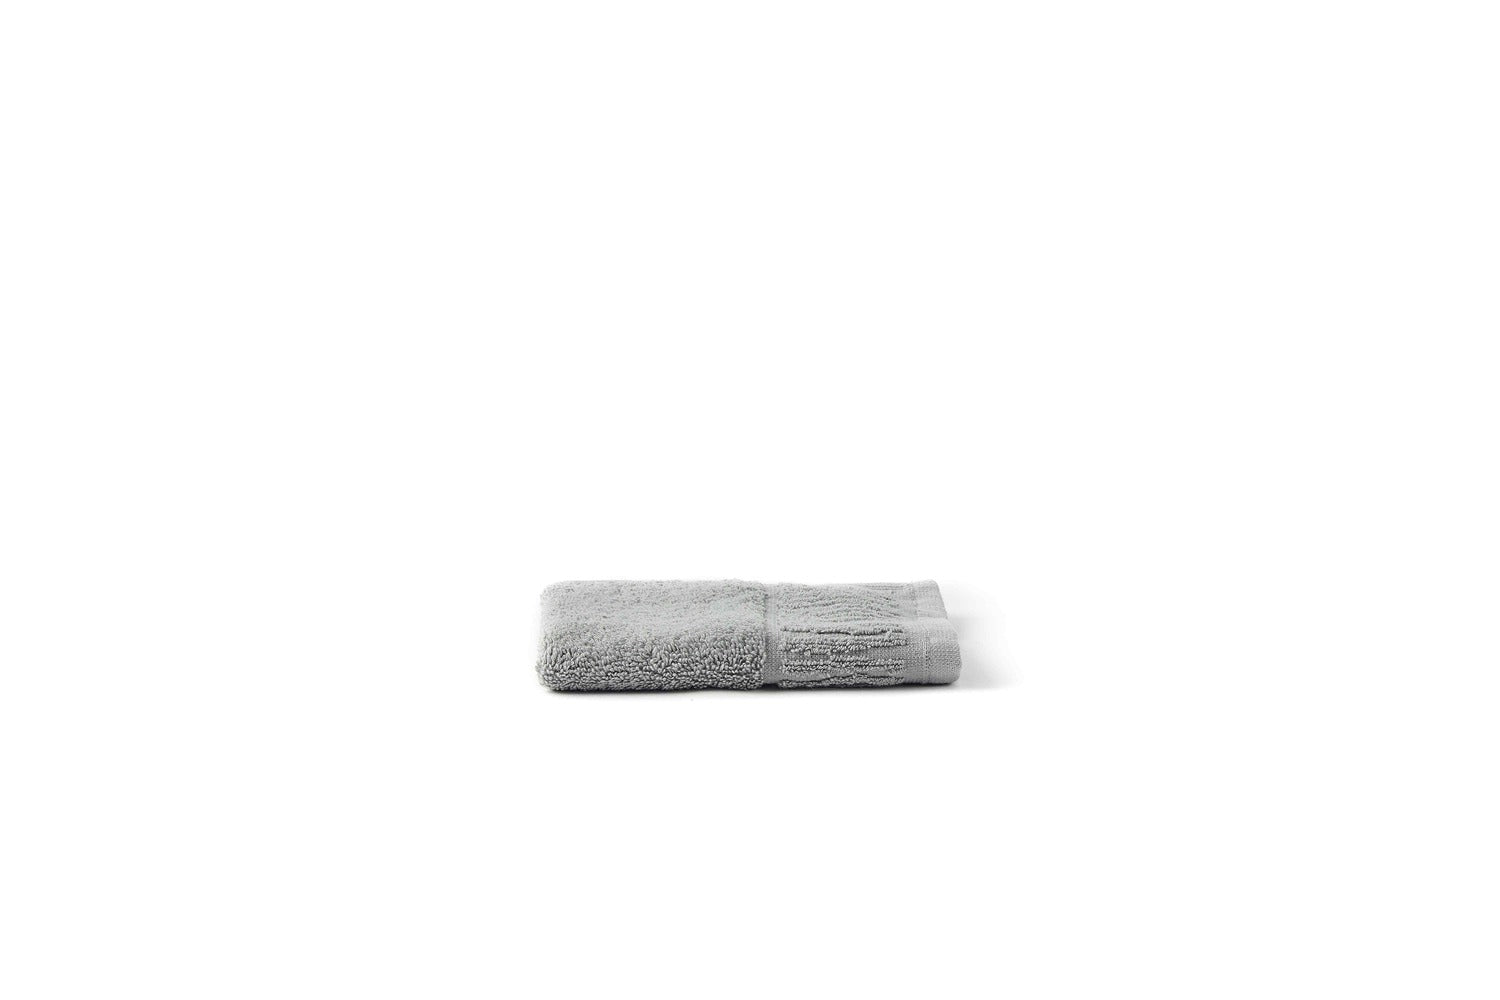 Silvon Hand Towel , White